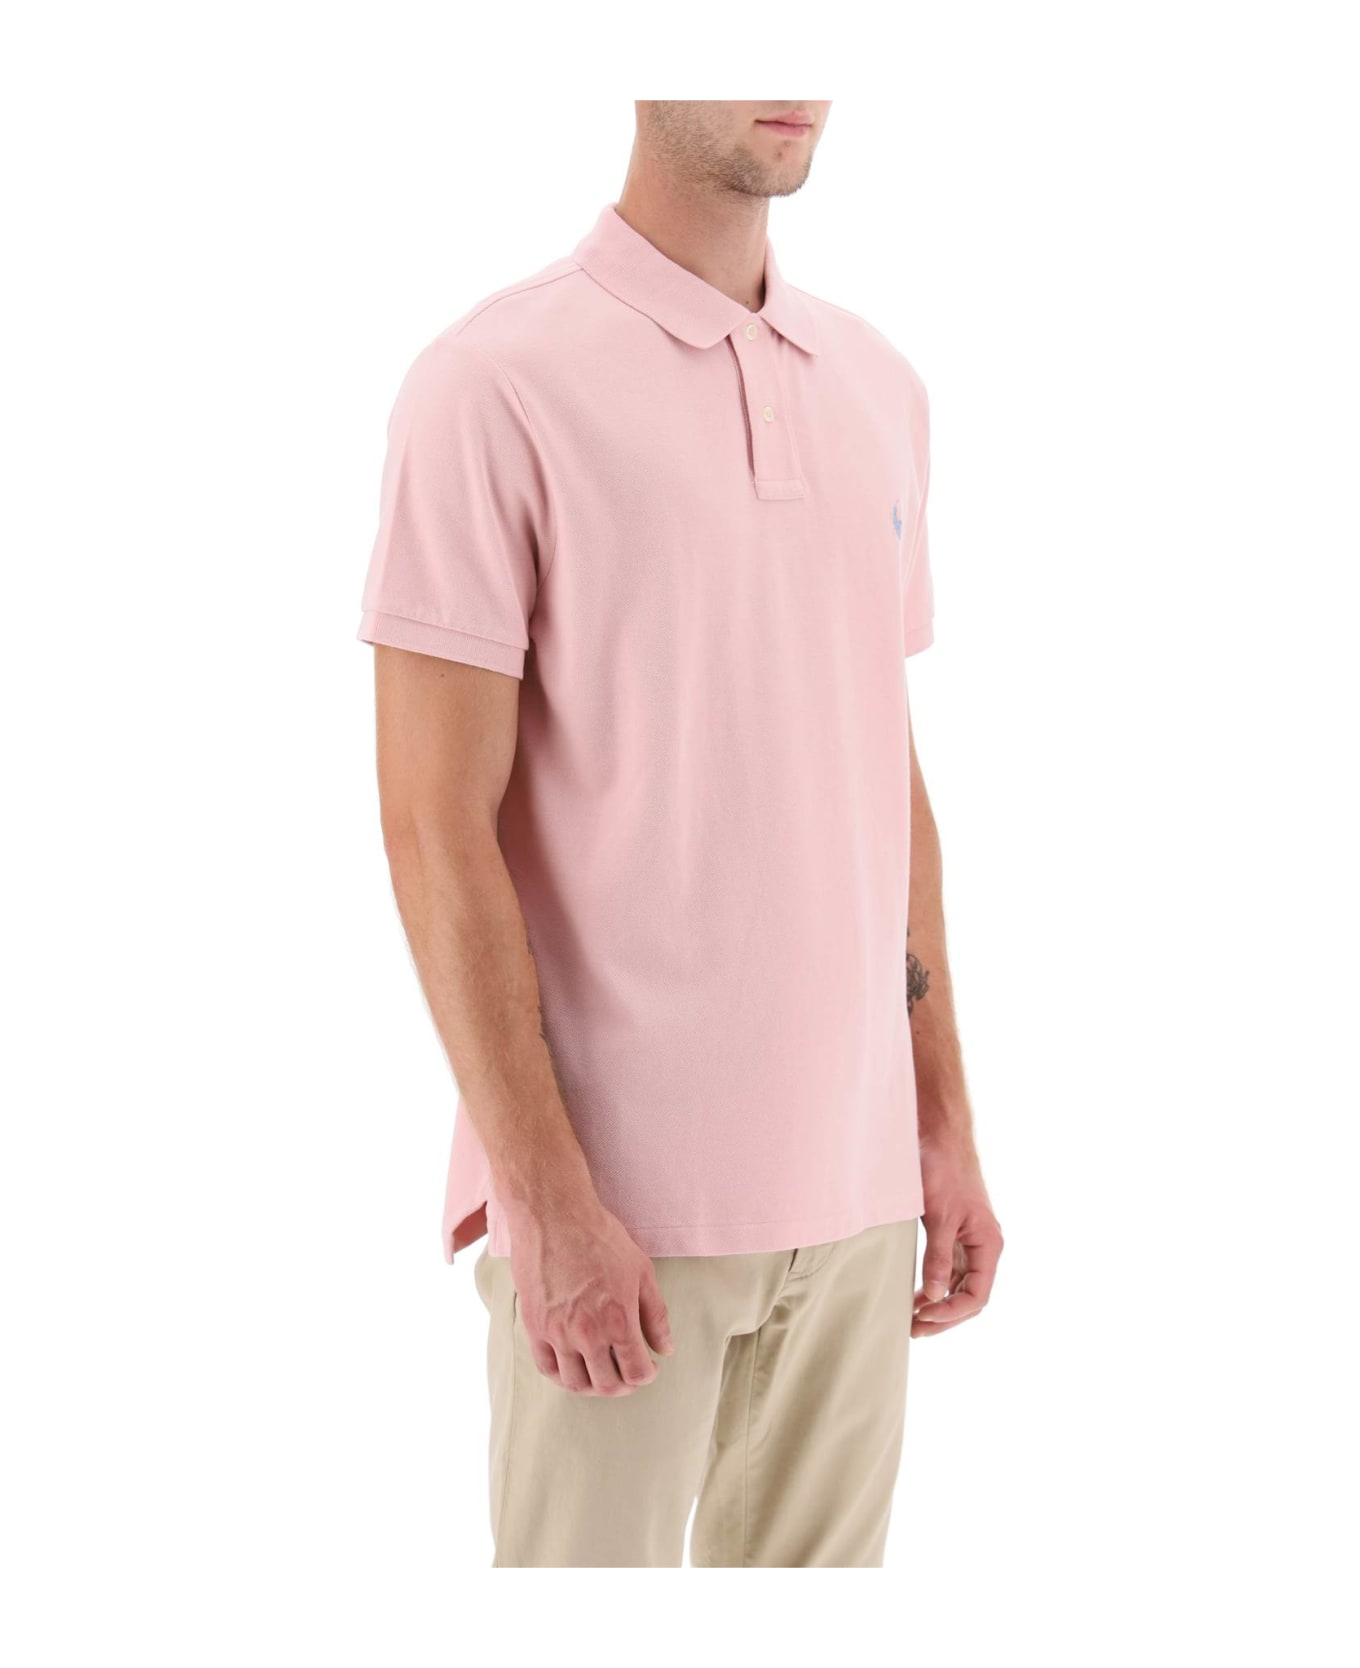 Polo Ralph Lauren Pique Cotton Polo Shirt - CHINO PINK (Pink)